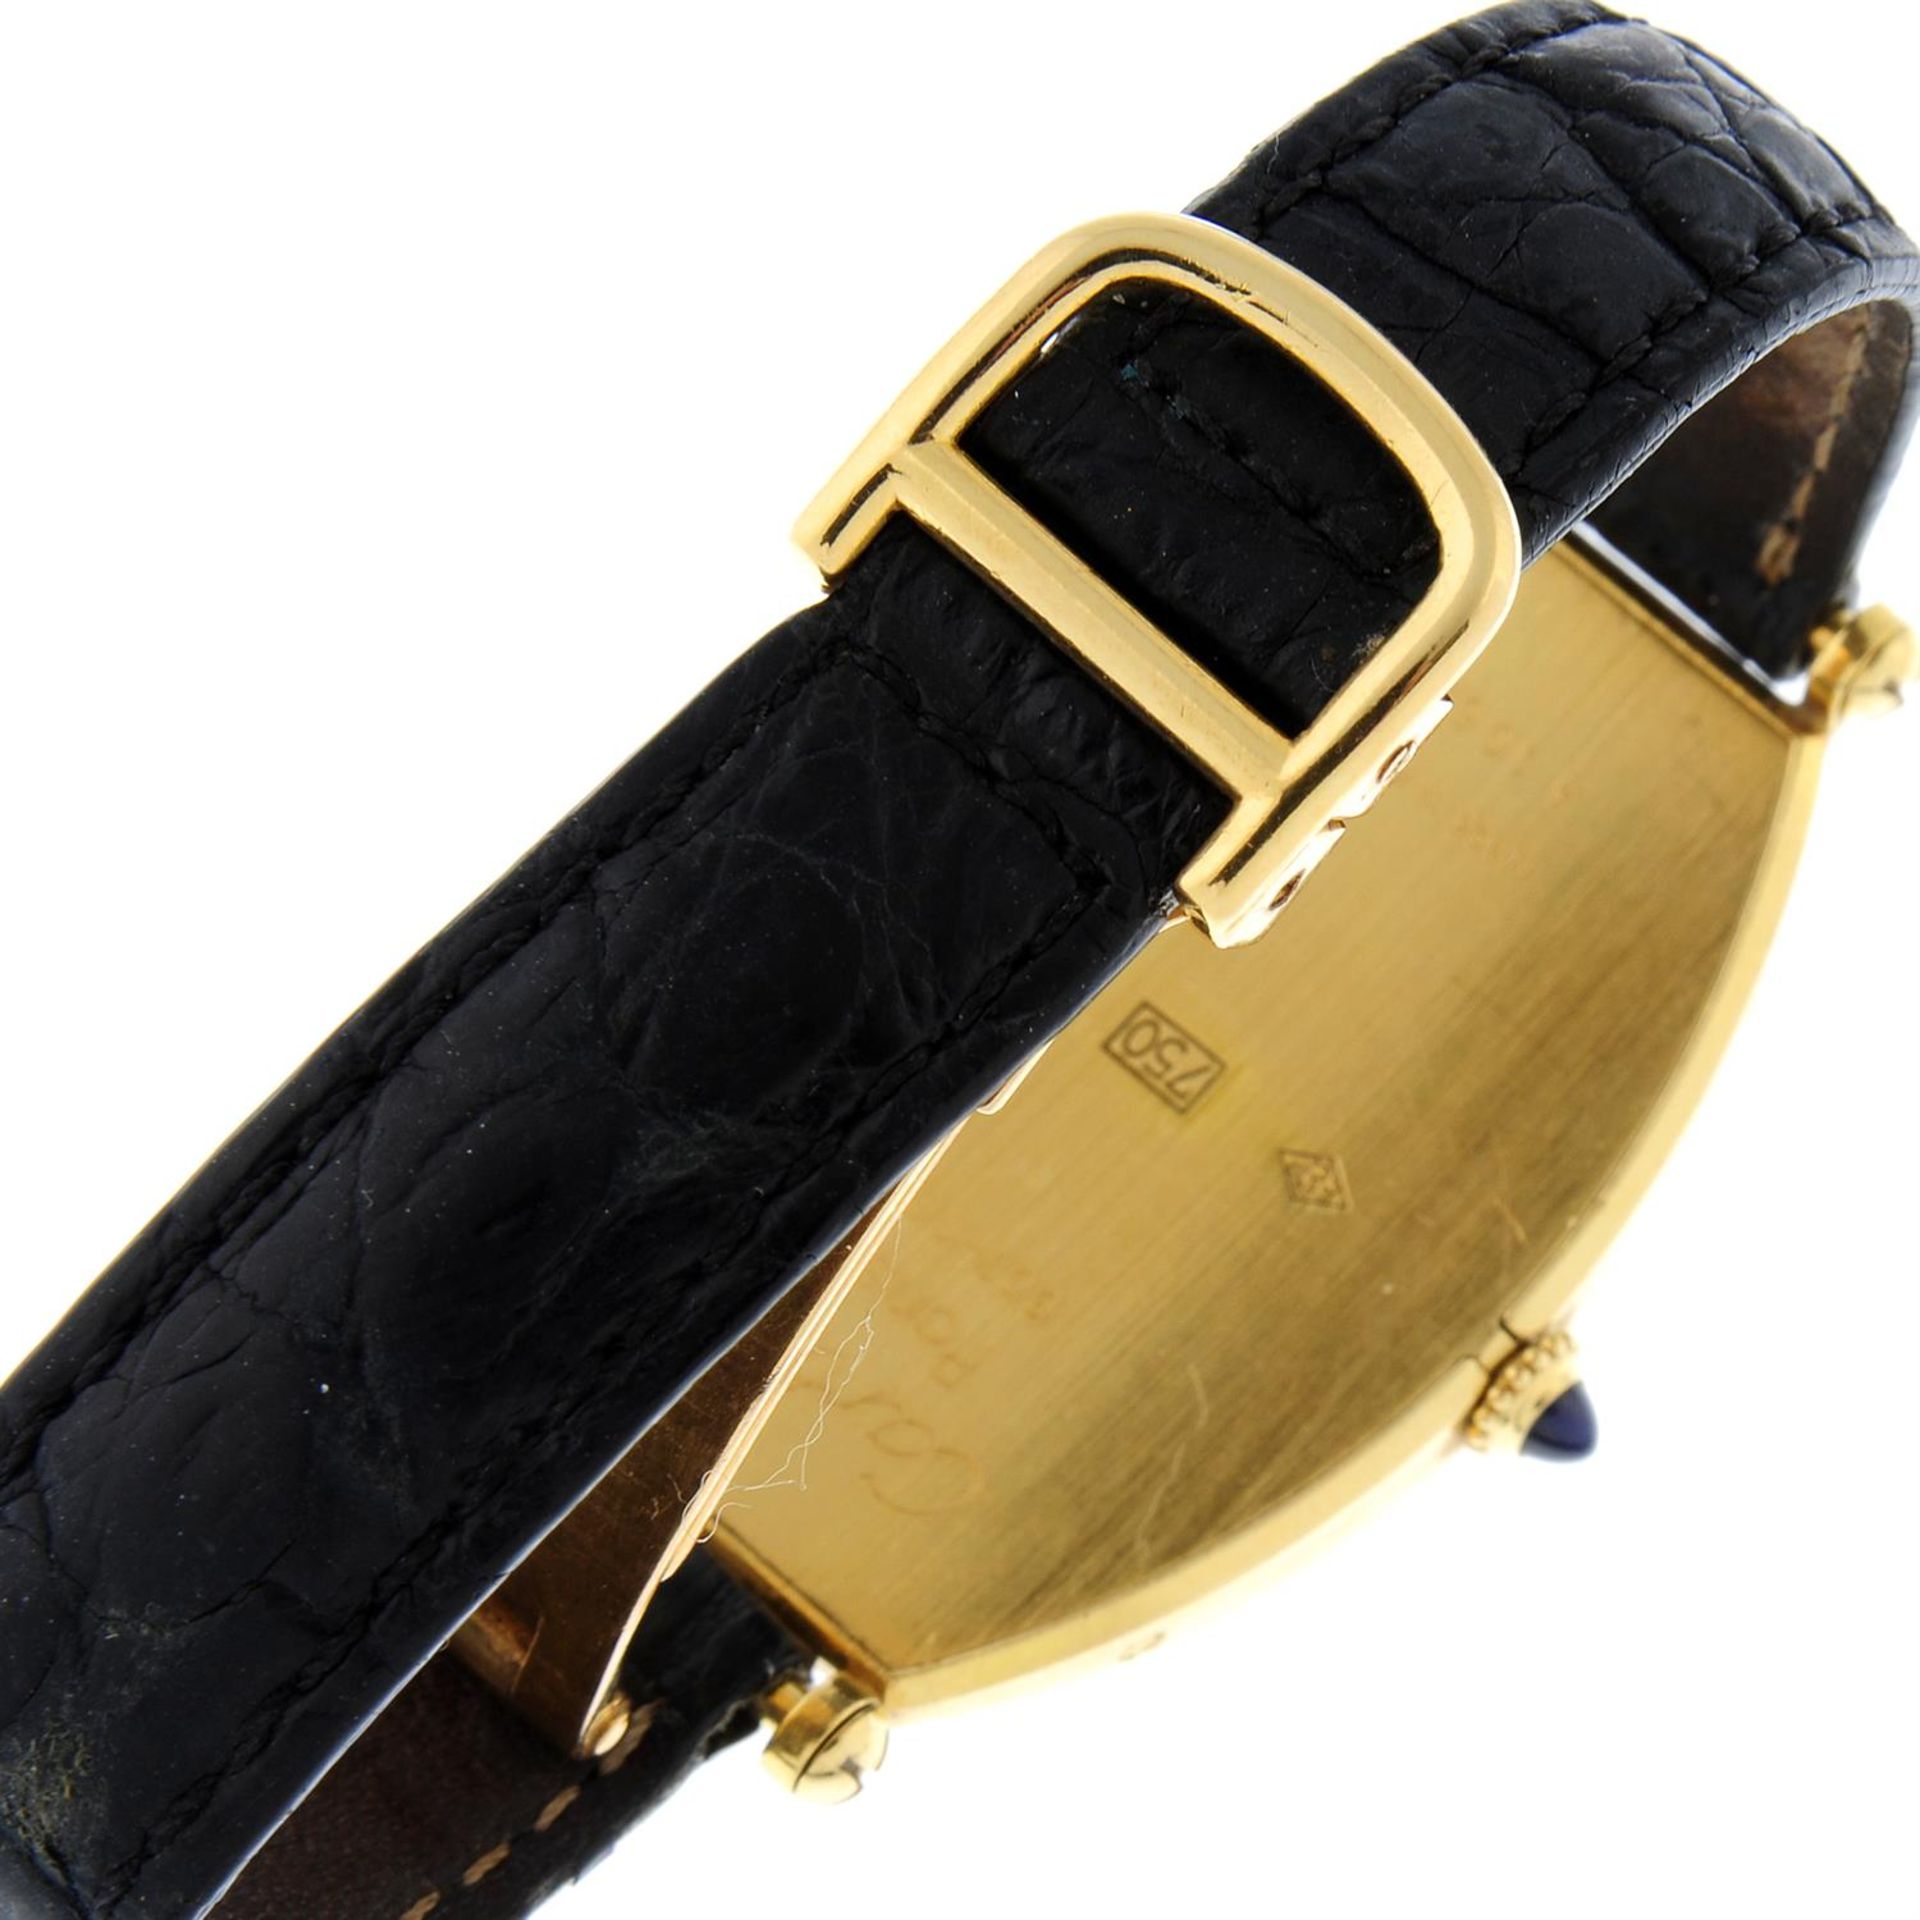 CARTIER - a yellow metal Tonneau wrist watch, 26x39mm. - Image 2 of 5